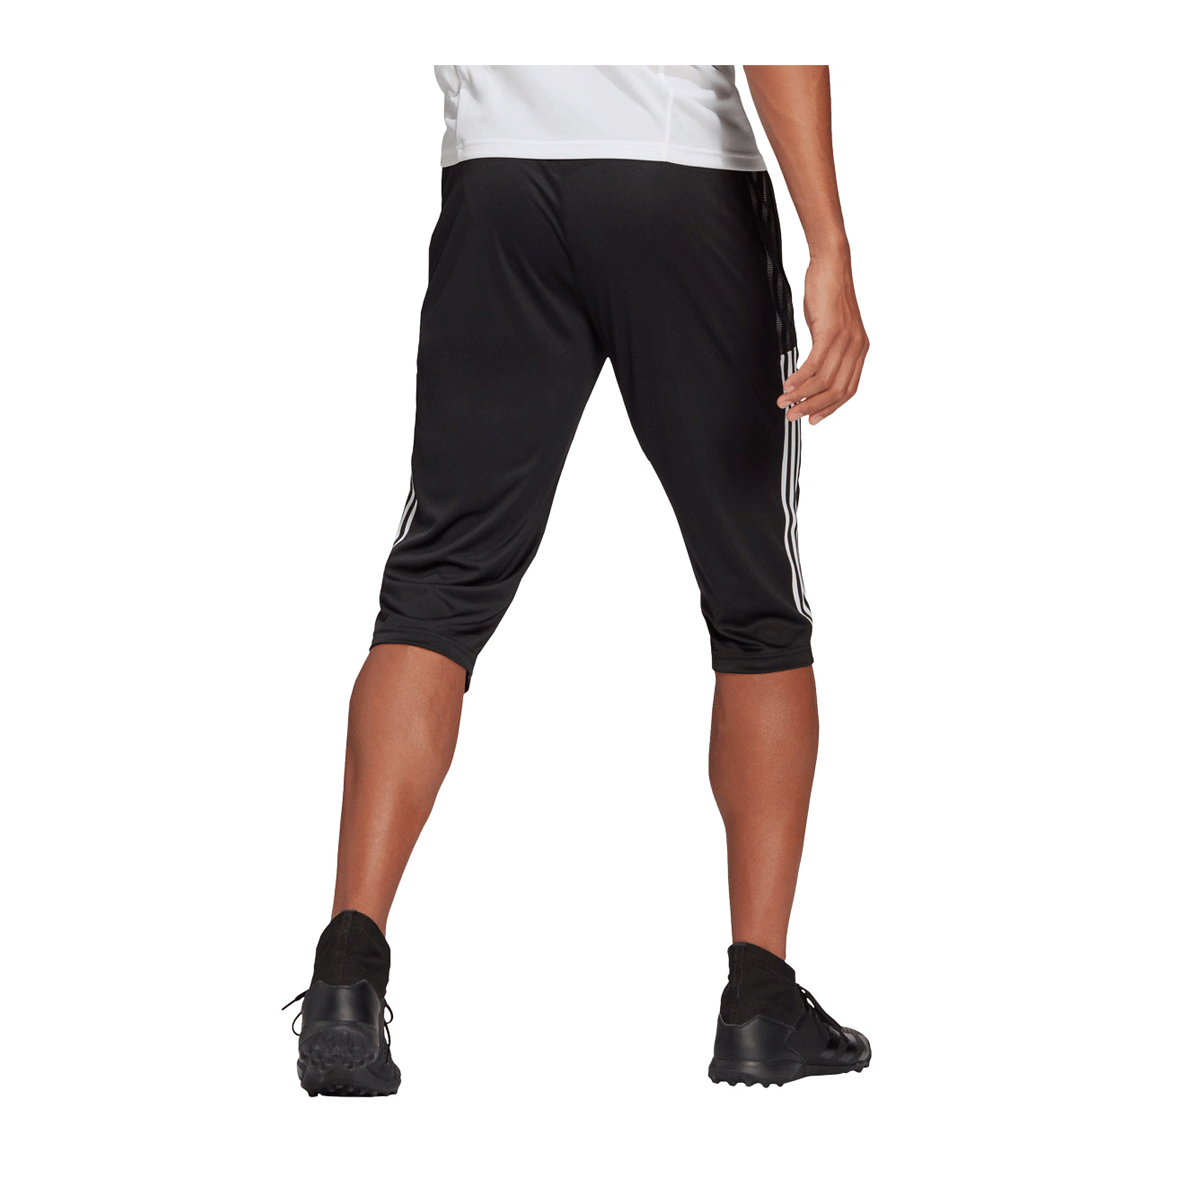 Men 3/4 Length Pocket Shorts Cargo Pants Work Trouser Military Cotton Soft  Solid | eBay